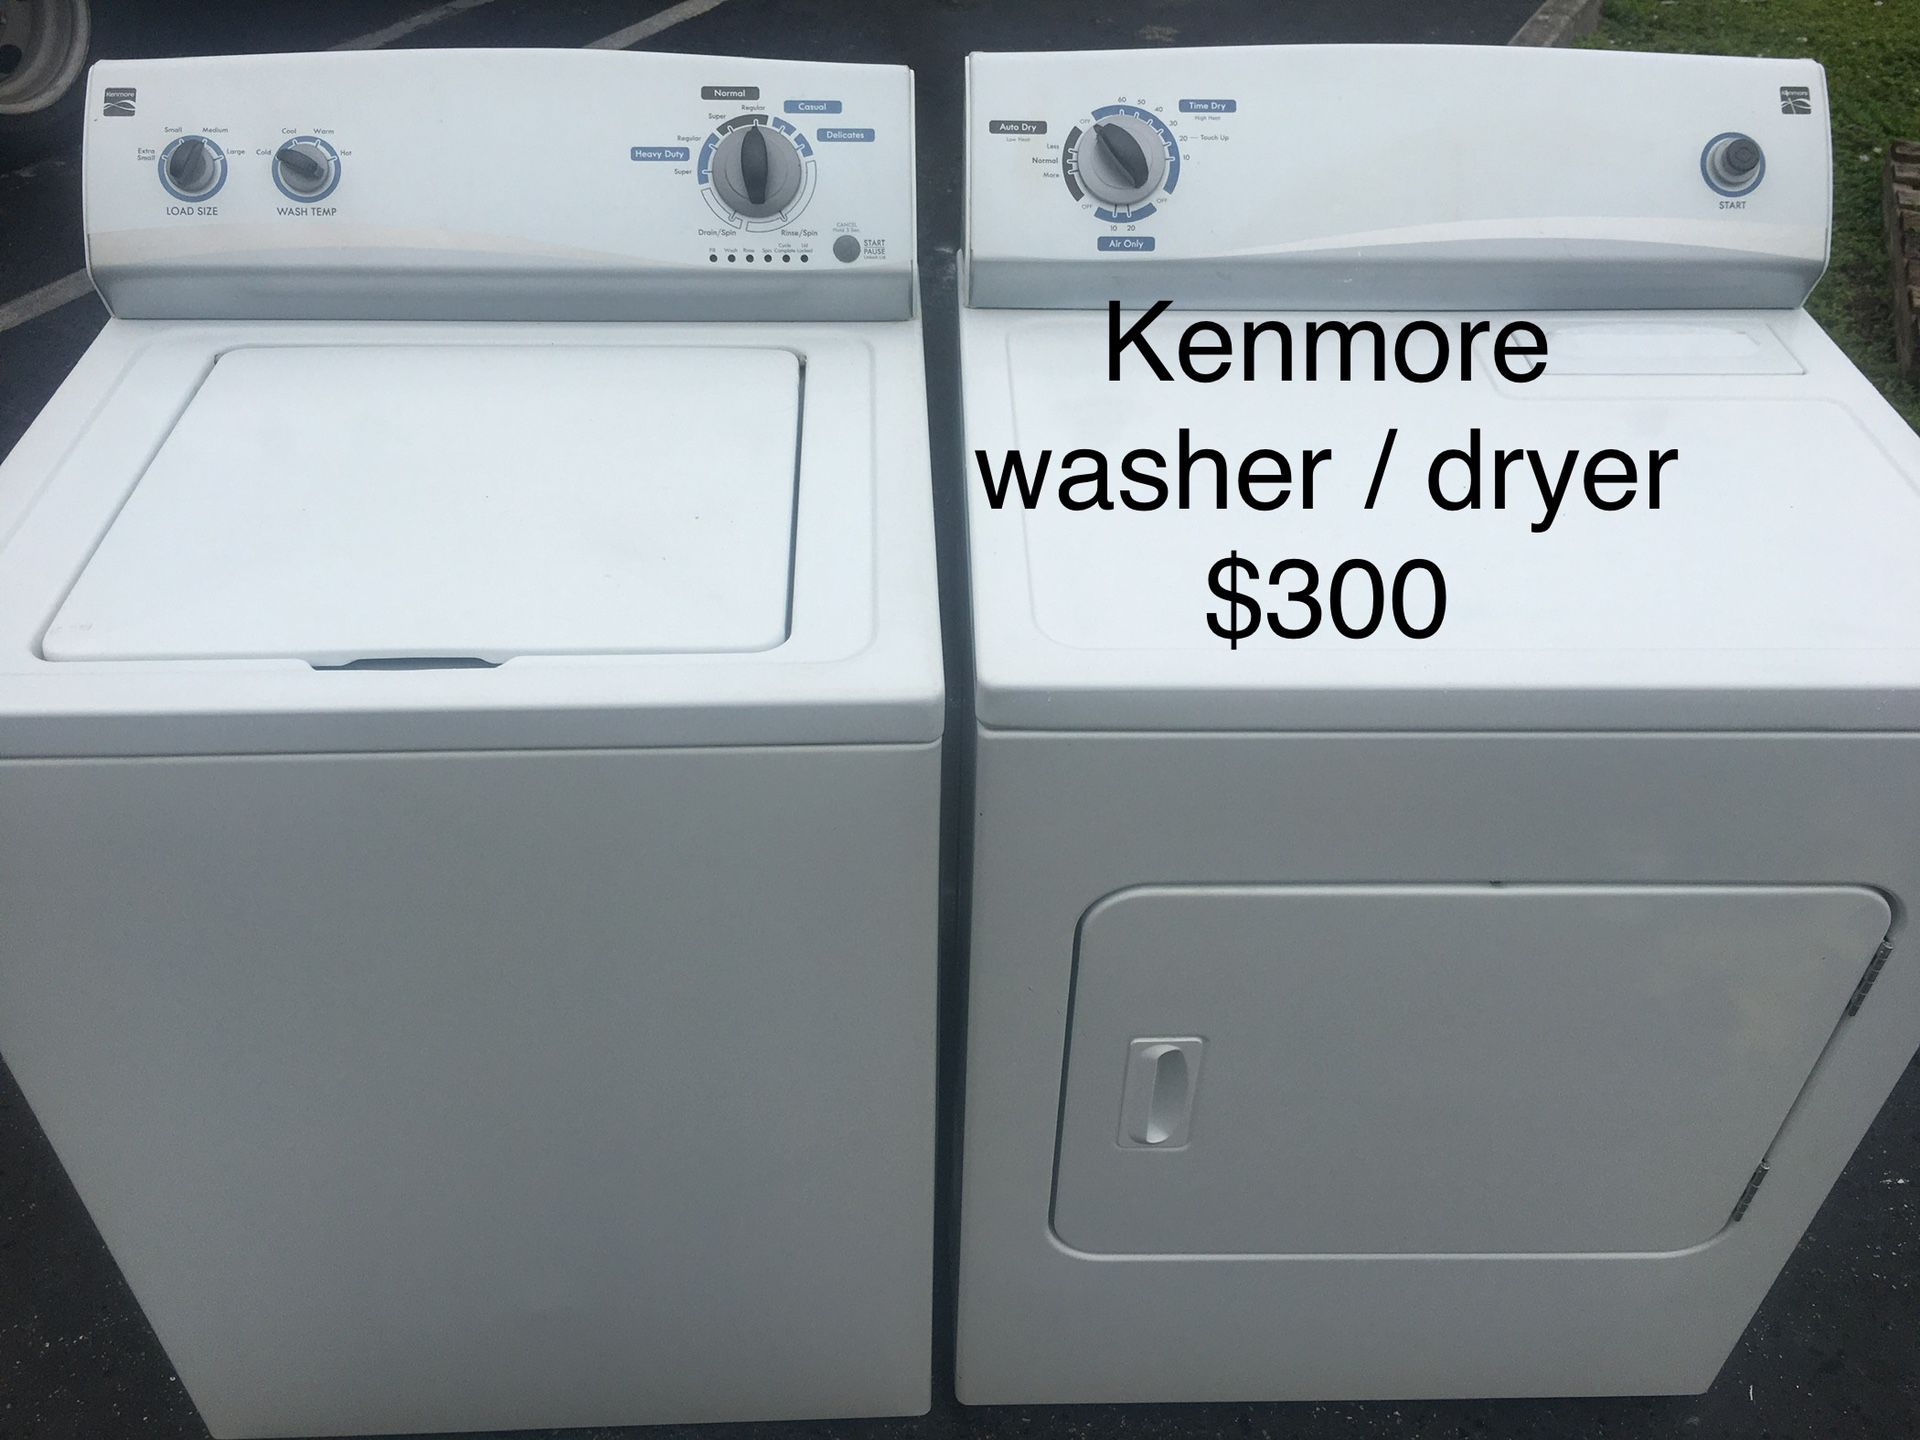 Kenmore washer dryer set / lavadora secadora